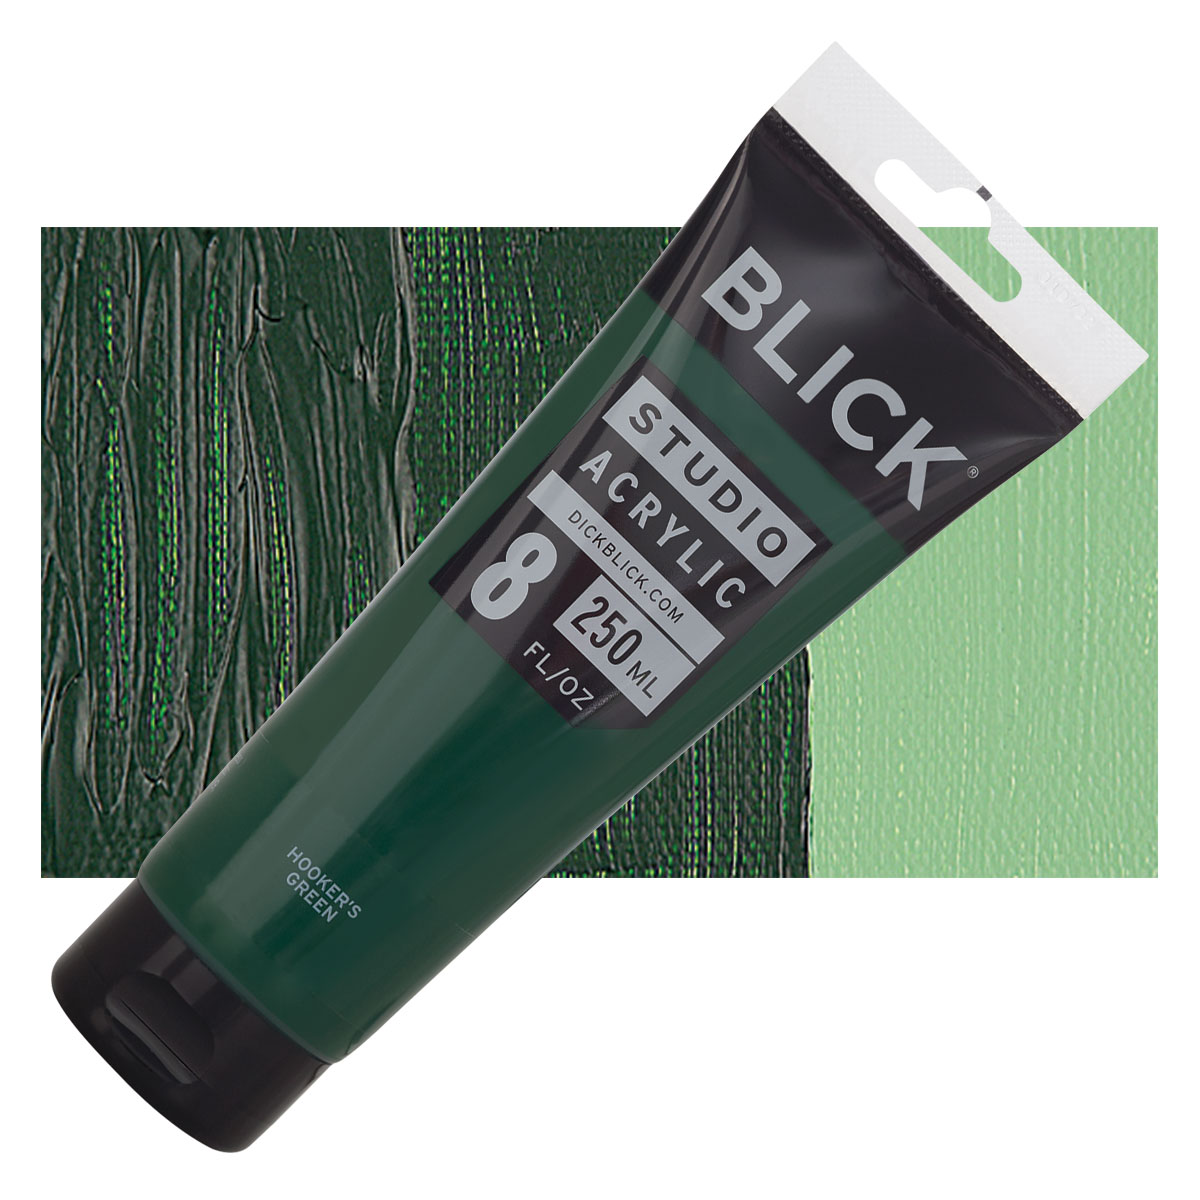 Hooker's Green Dark (1oz Fluid Acrylic)